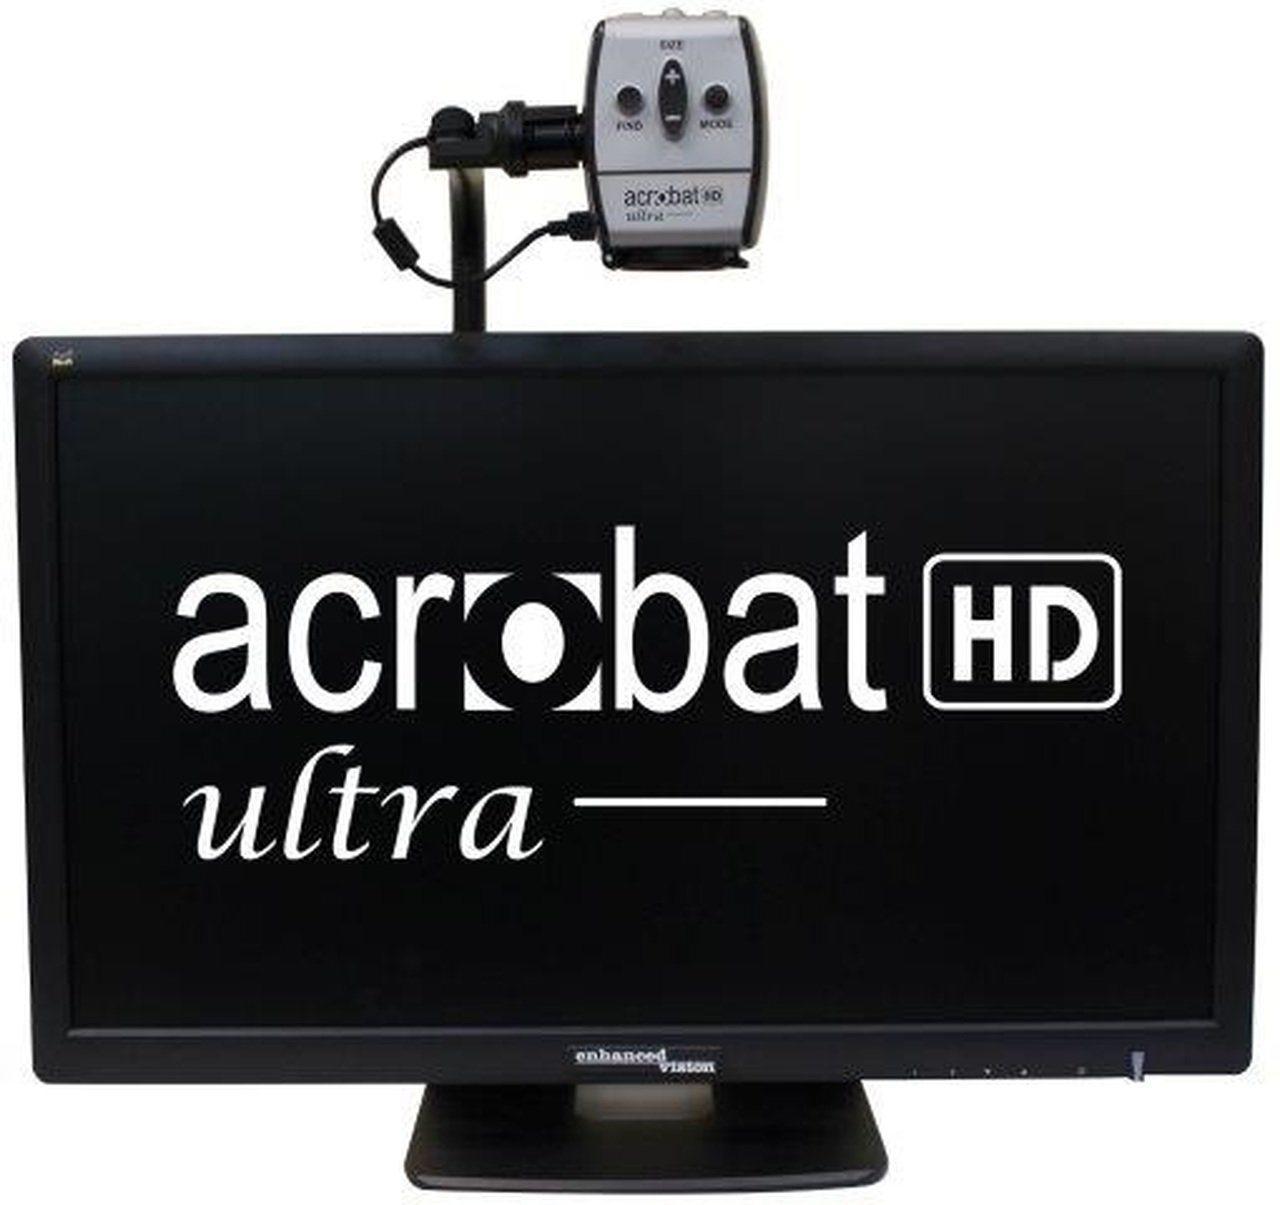 Acrobat HD Video Magnifier Ultra LCD - 24